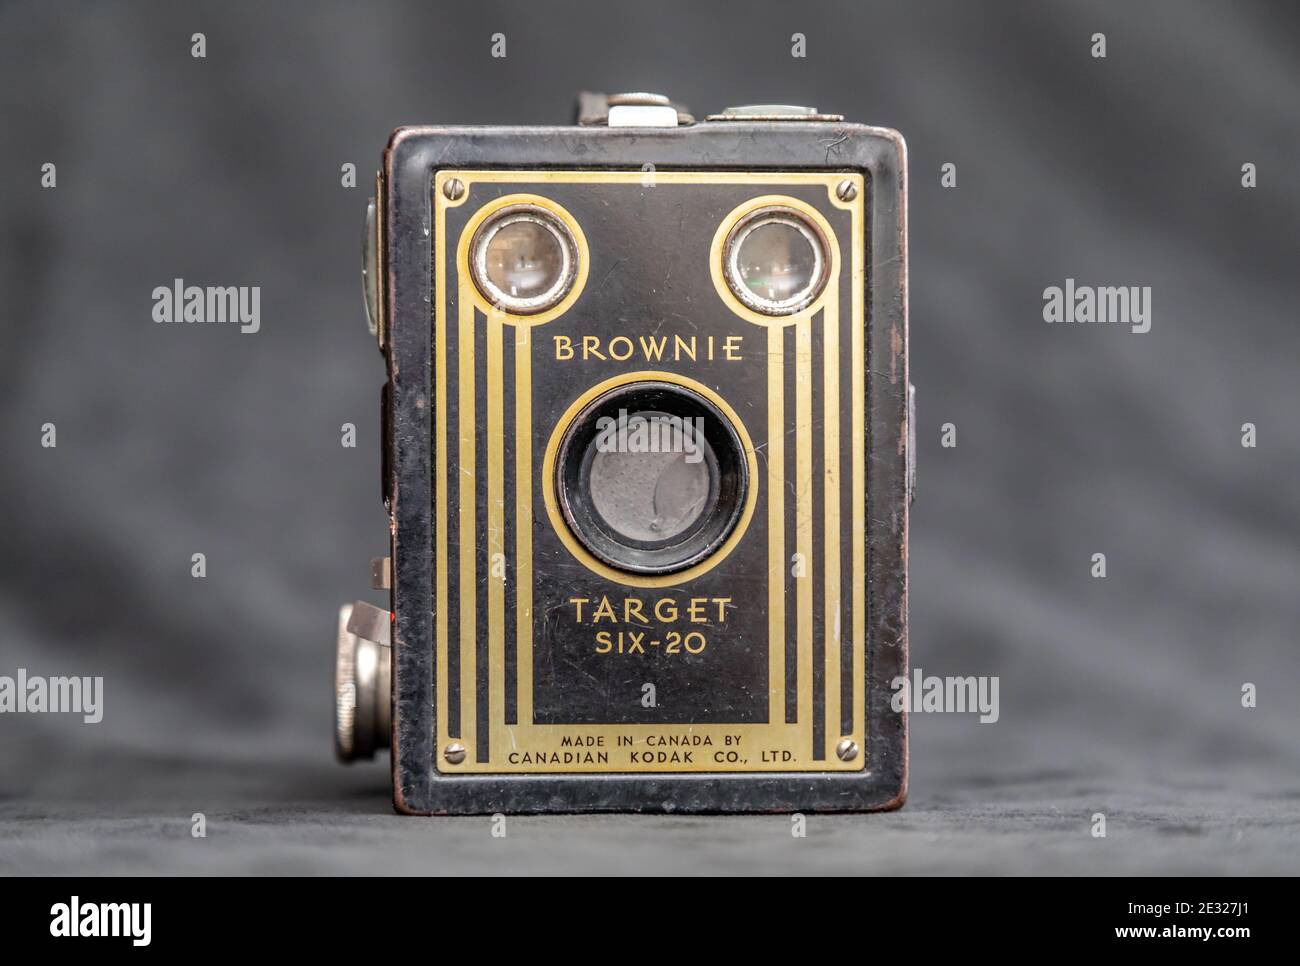 Brownie Target Six-20 Kamera Stockfoto